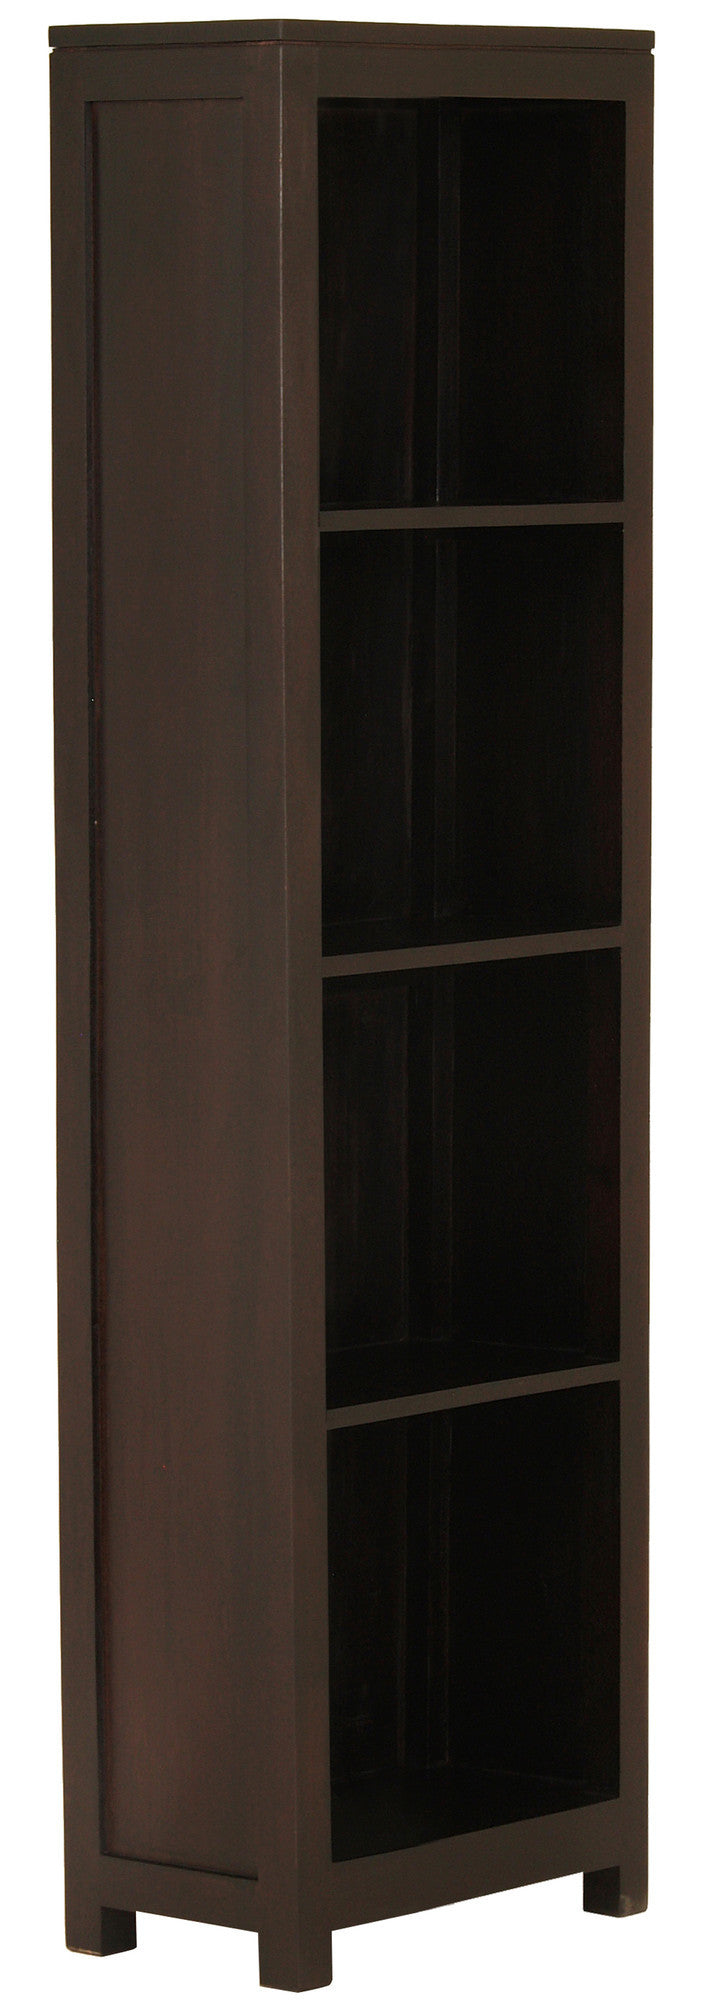 Scandinavia Solid Teak Timber Slim Bookcase - Light Pecan TWS899BC-000-TA-LP